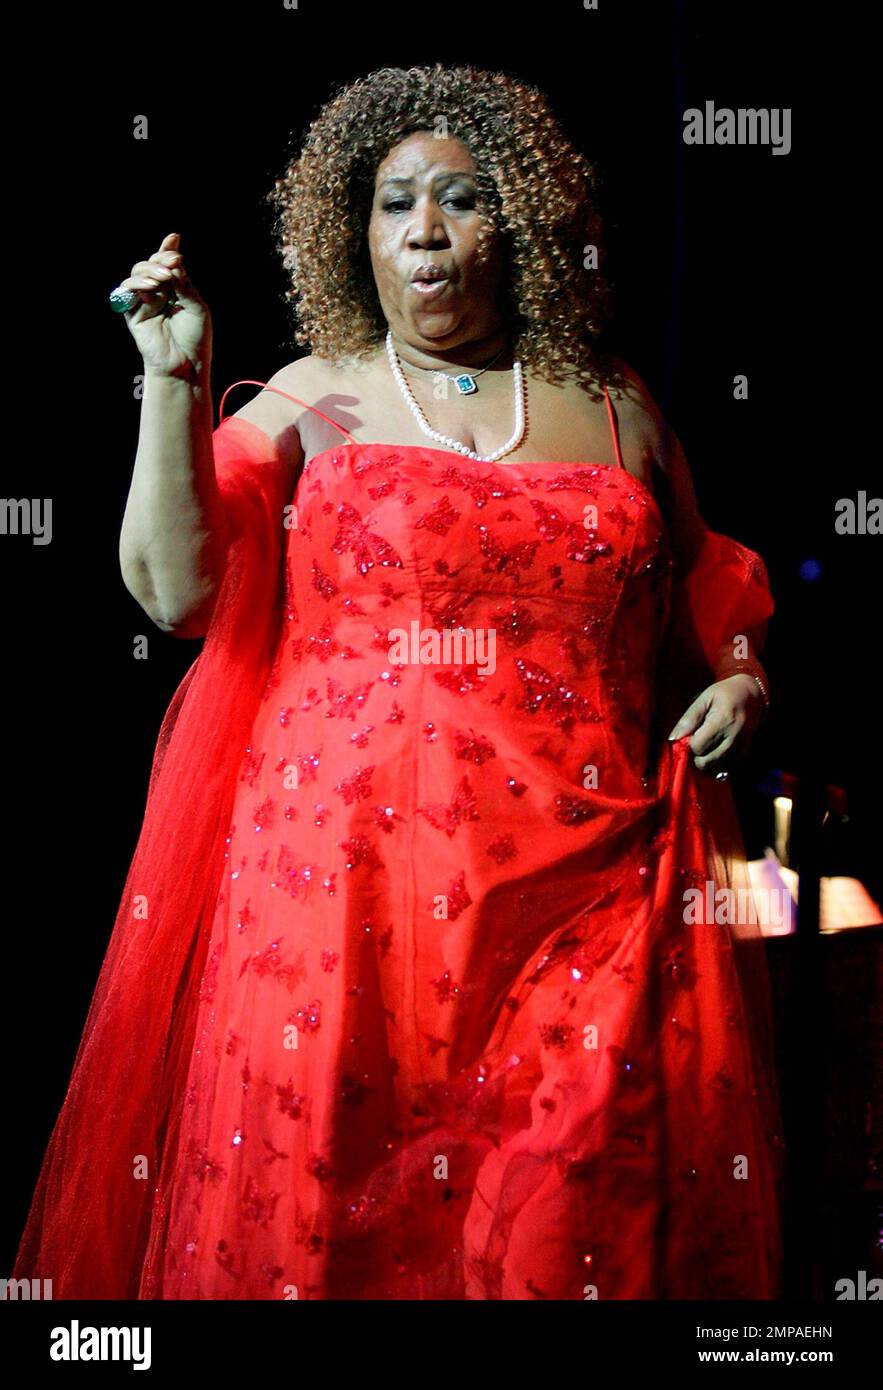 « The Queen of Soul », Aretha Franklin se produit en direct au Seminole Hard Rock Hotel & Casino. Hollywood, Floride. 03/16/10. Banque D'Images